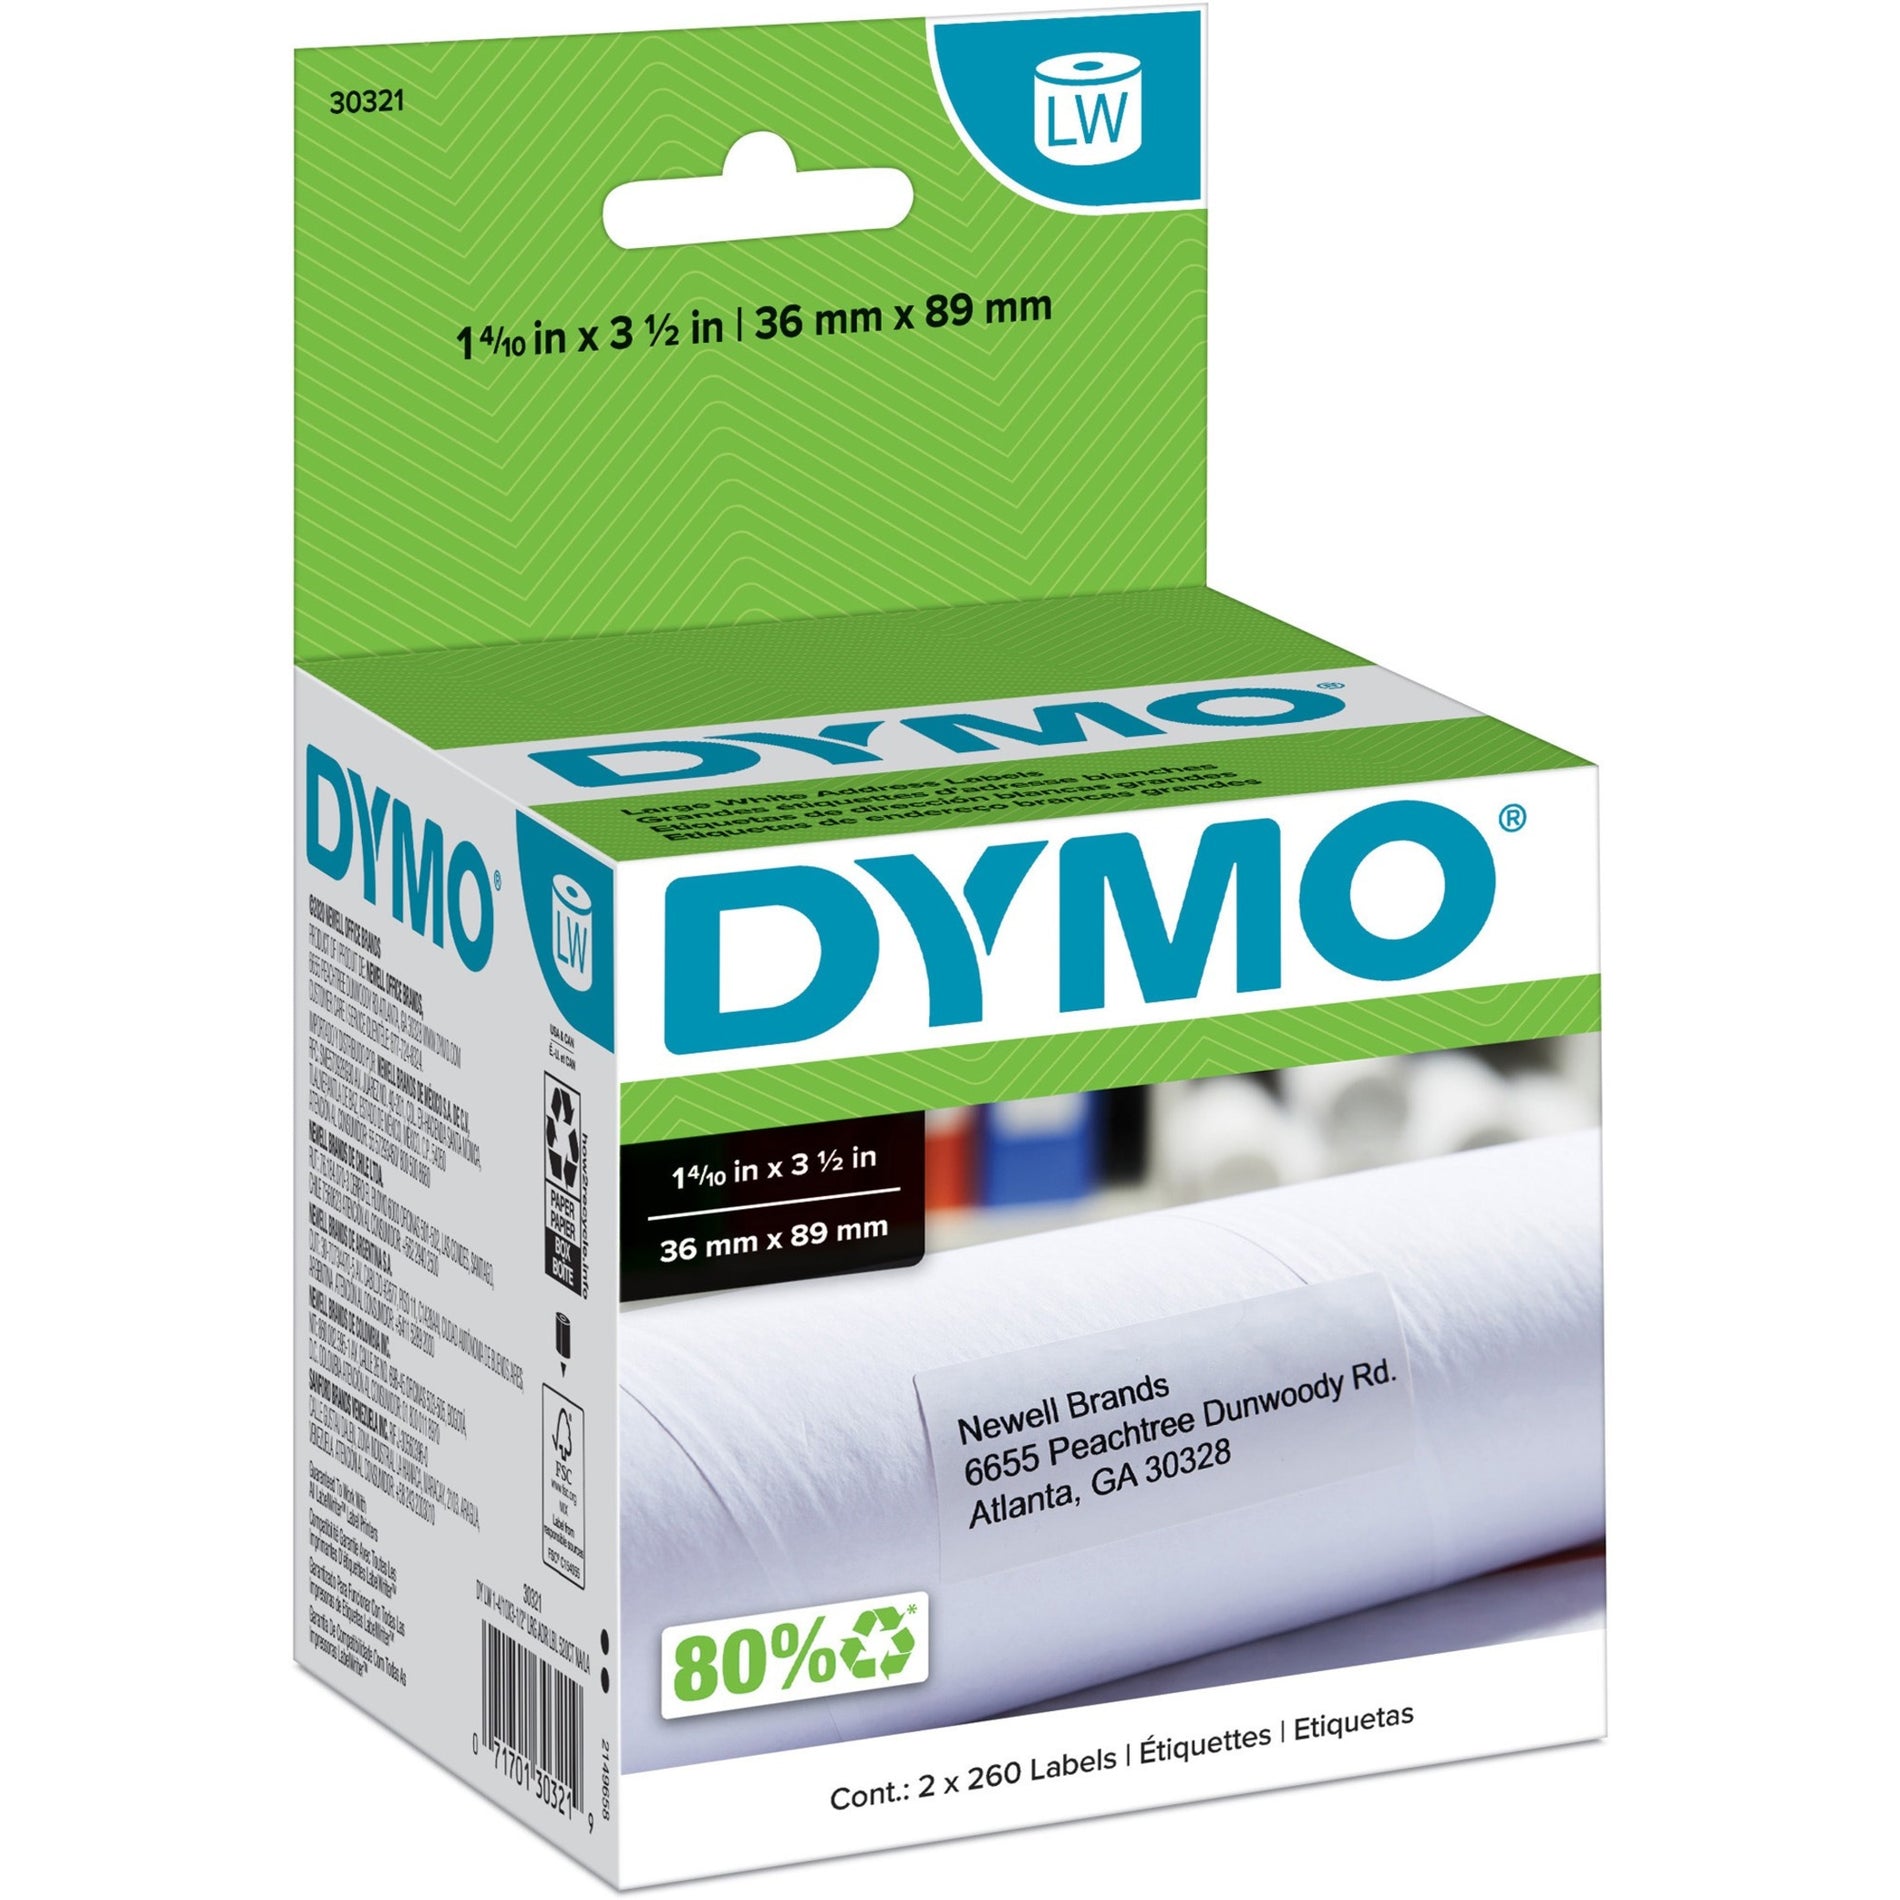 Dymo 30321 Large Address Labels, 520 Labels per Box